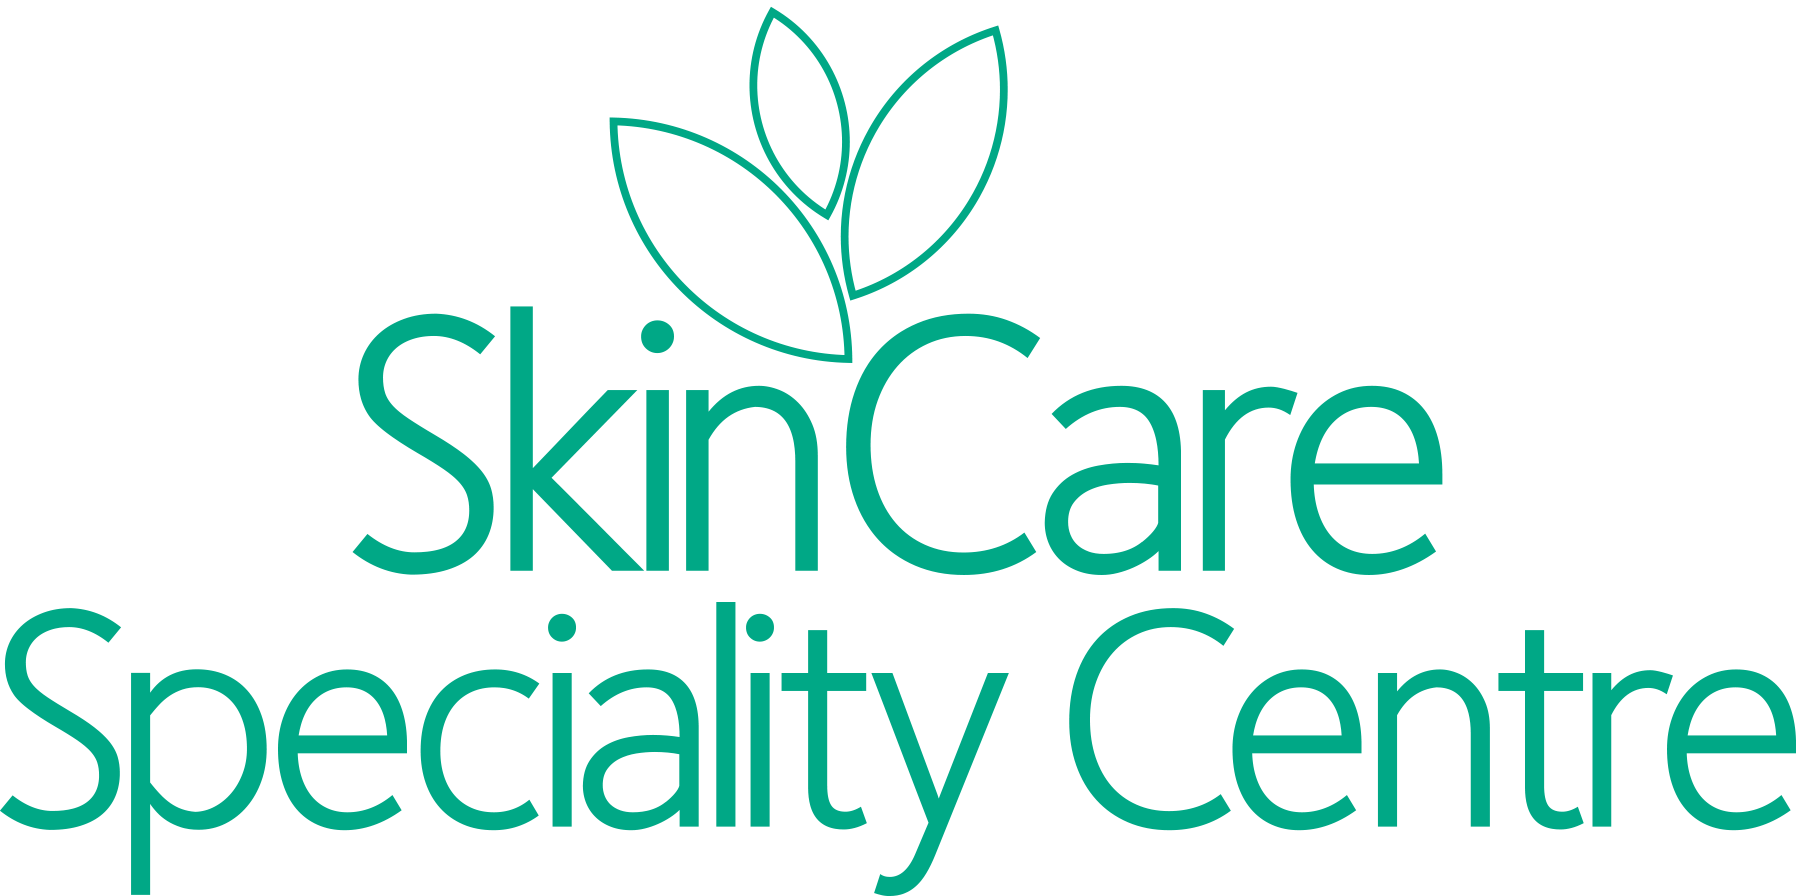 Skincare Speciality Center Logo | Stark Communications Pvt Ltd